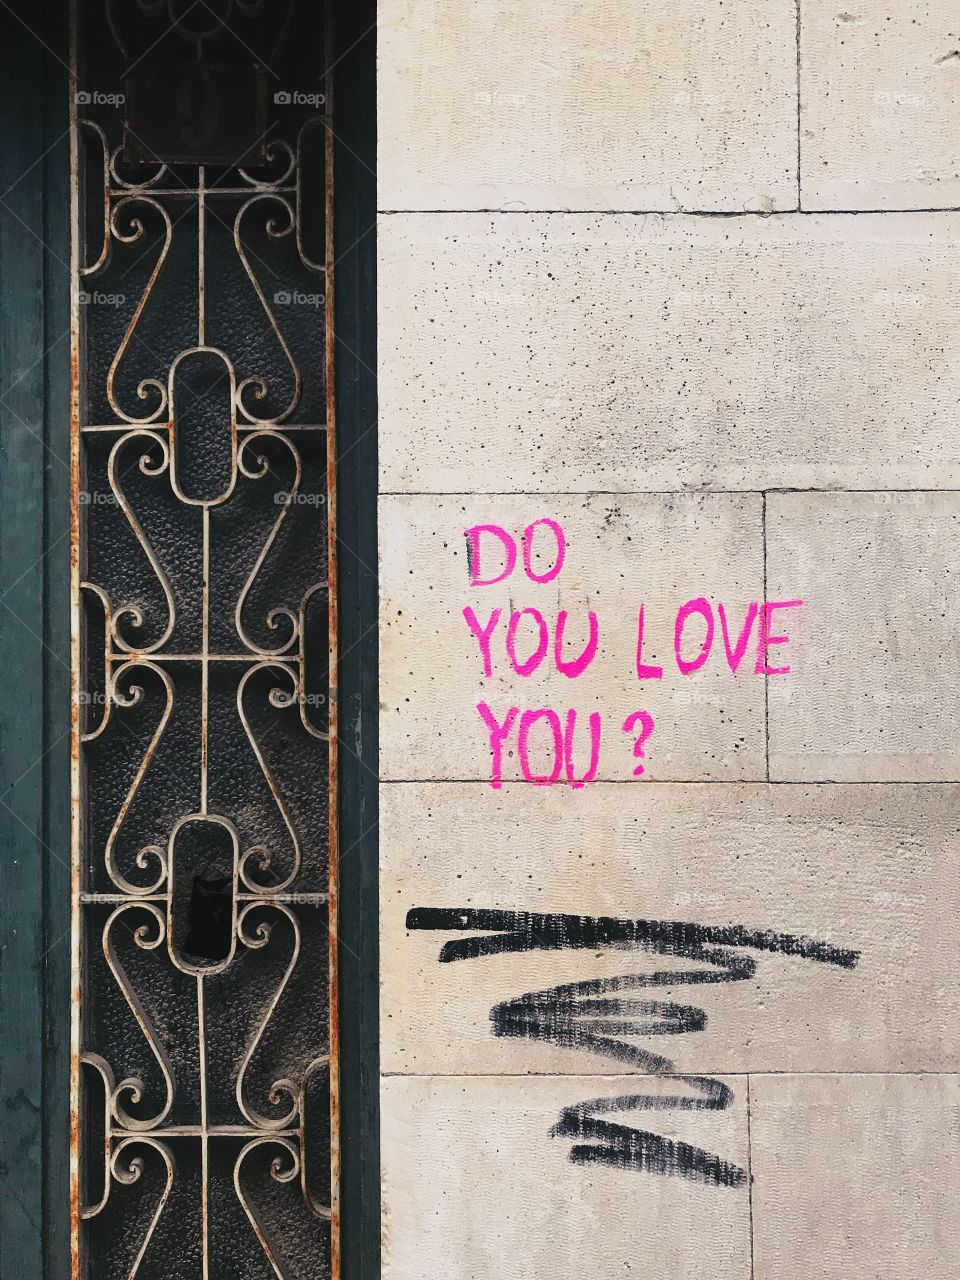 Do you love you?